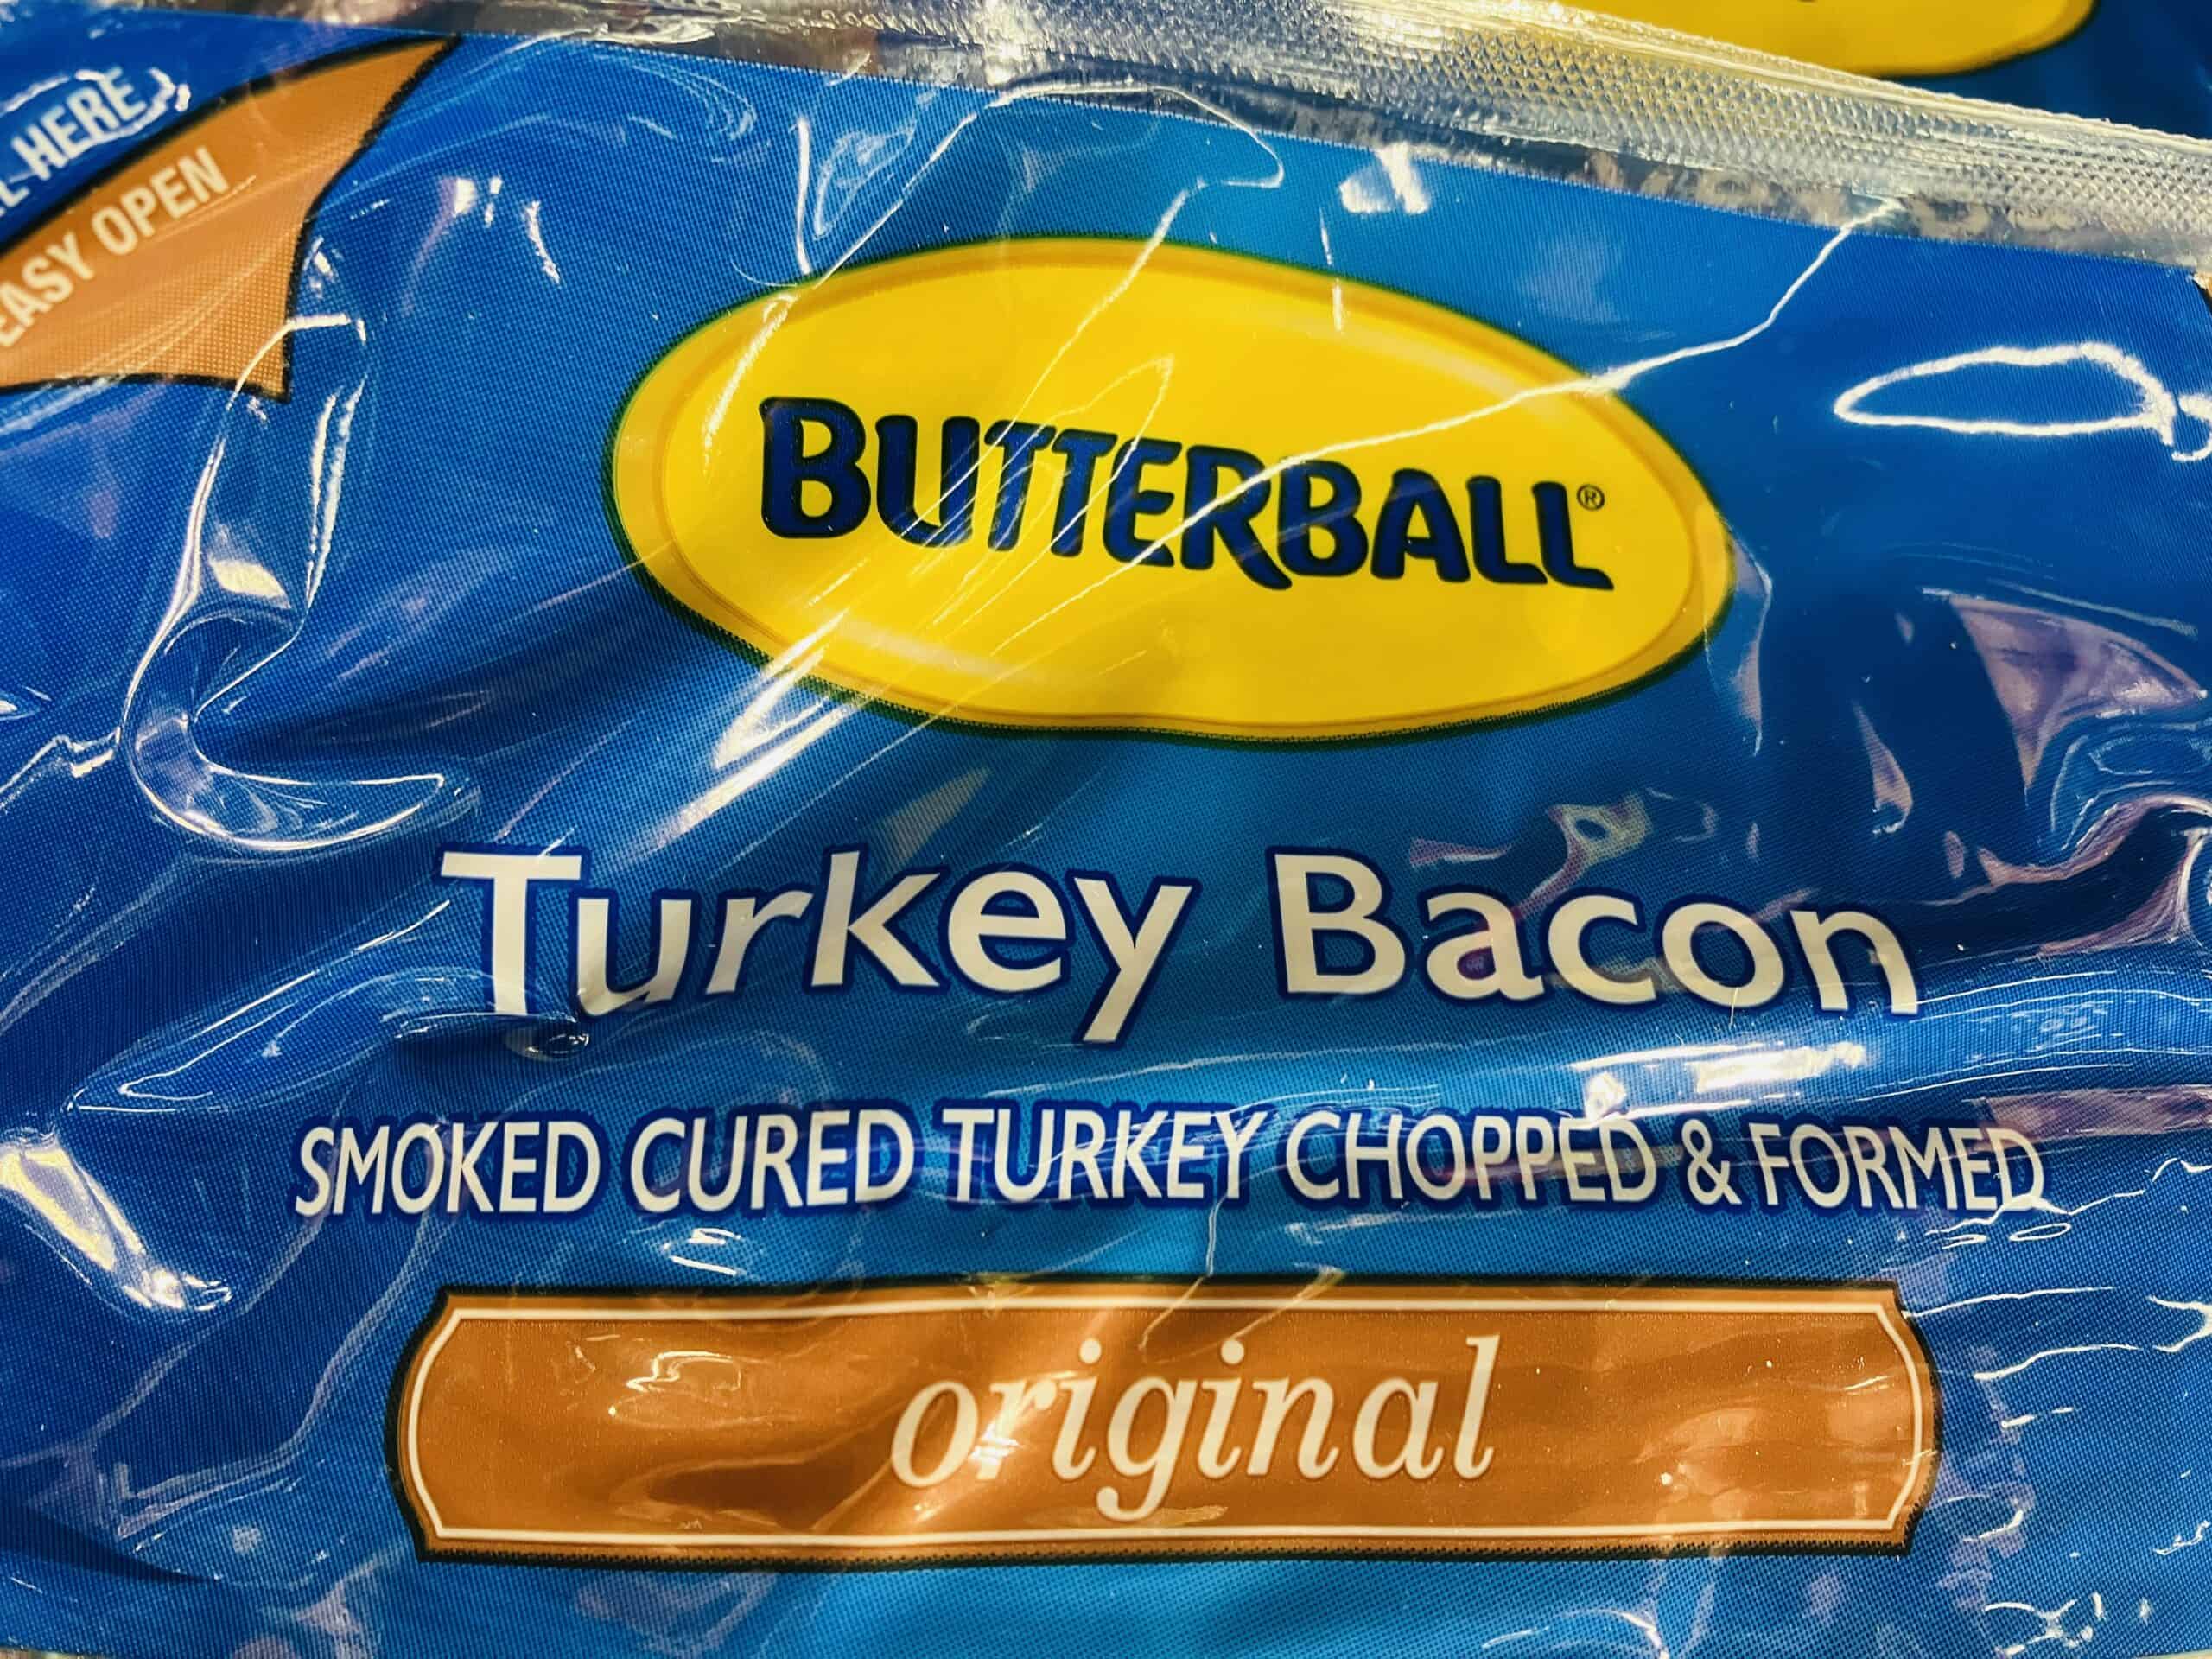 Butterball turkey bacon label